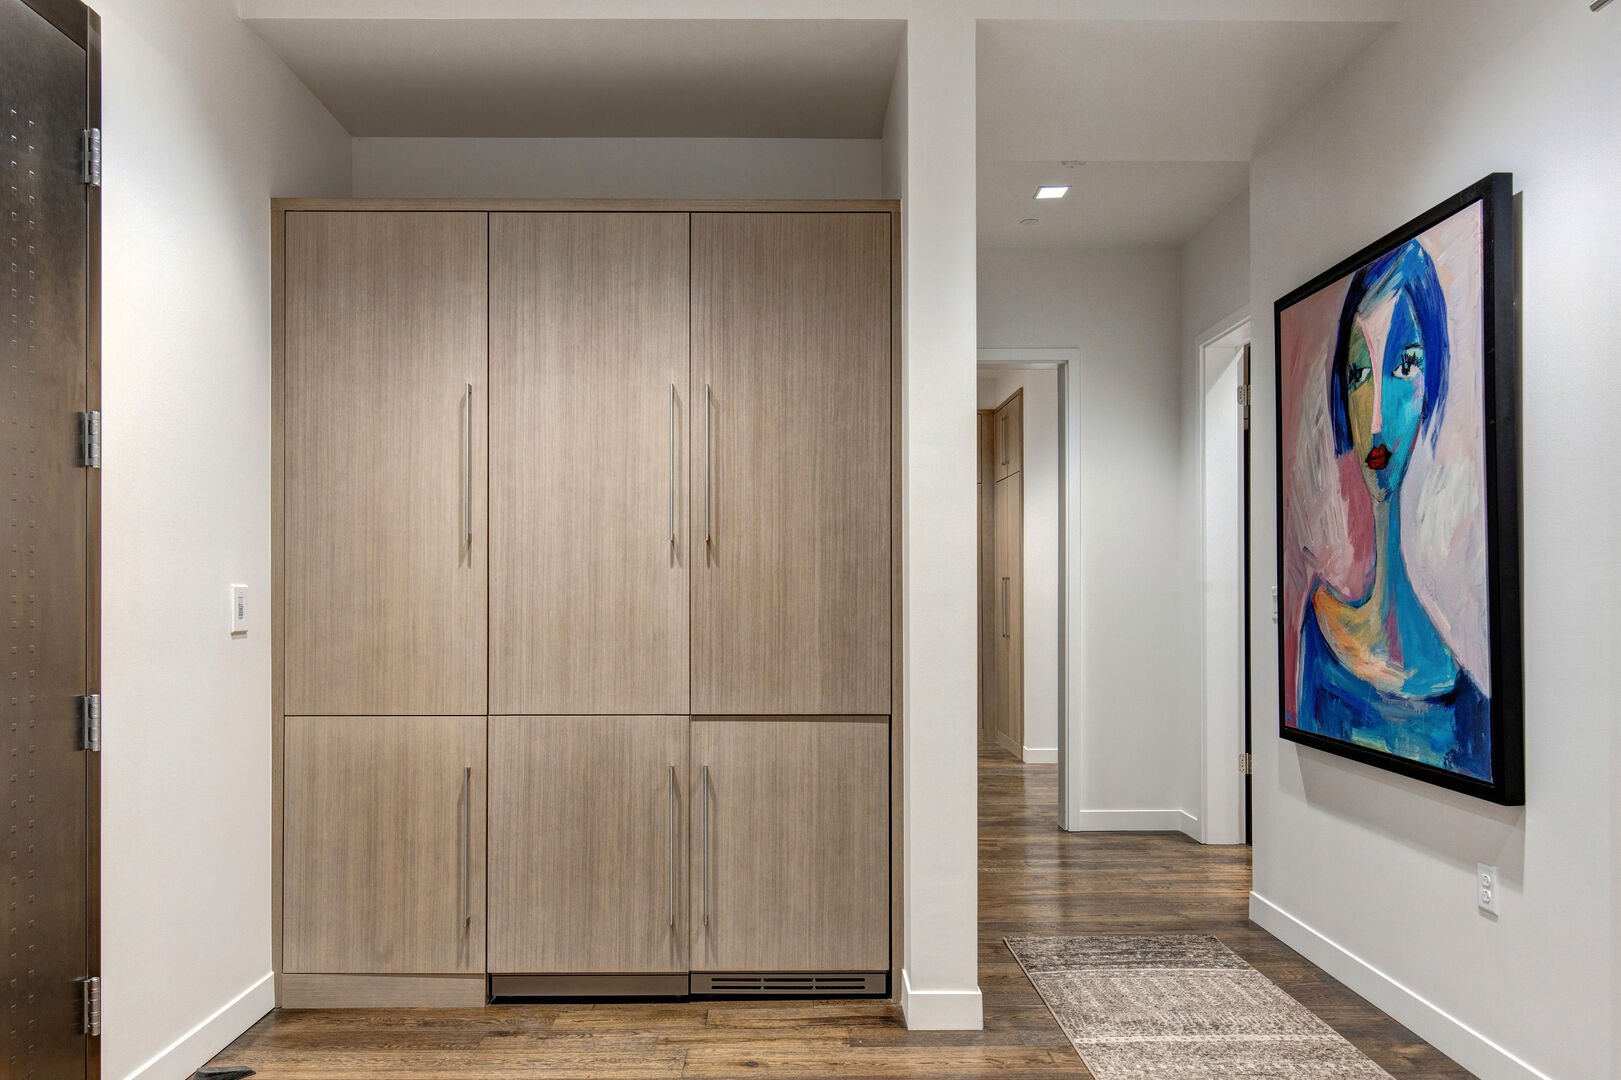 Hallway- W/D in lower cabinets